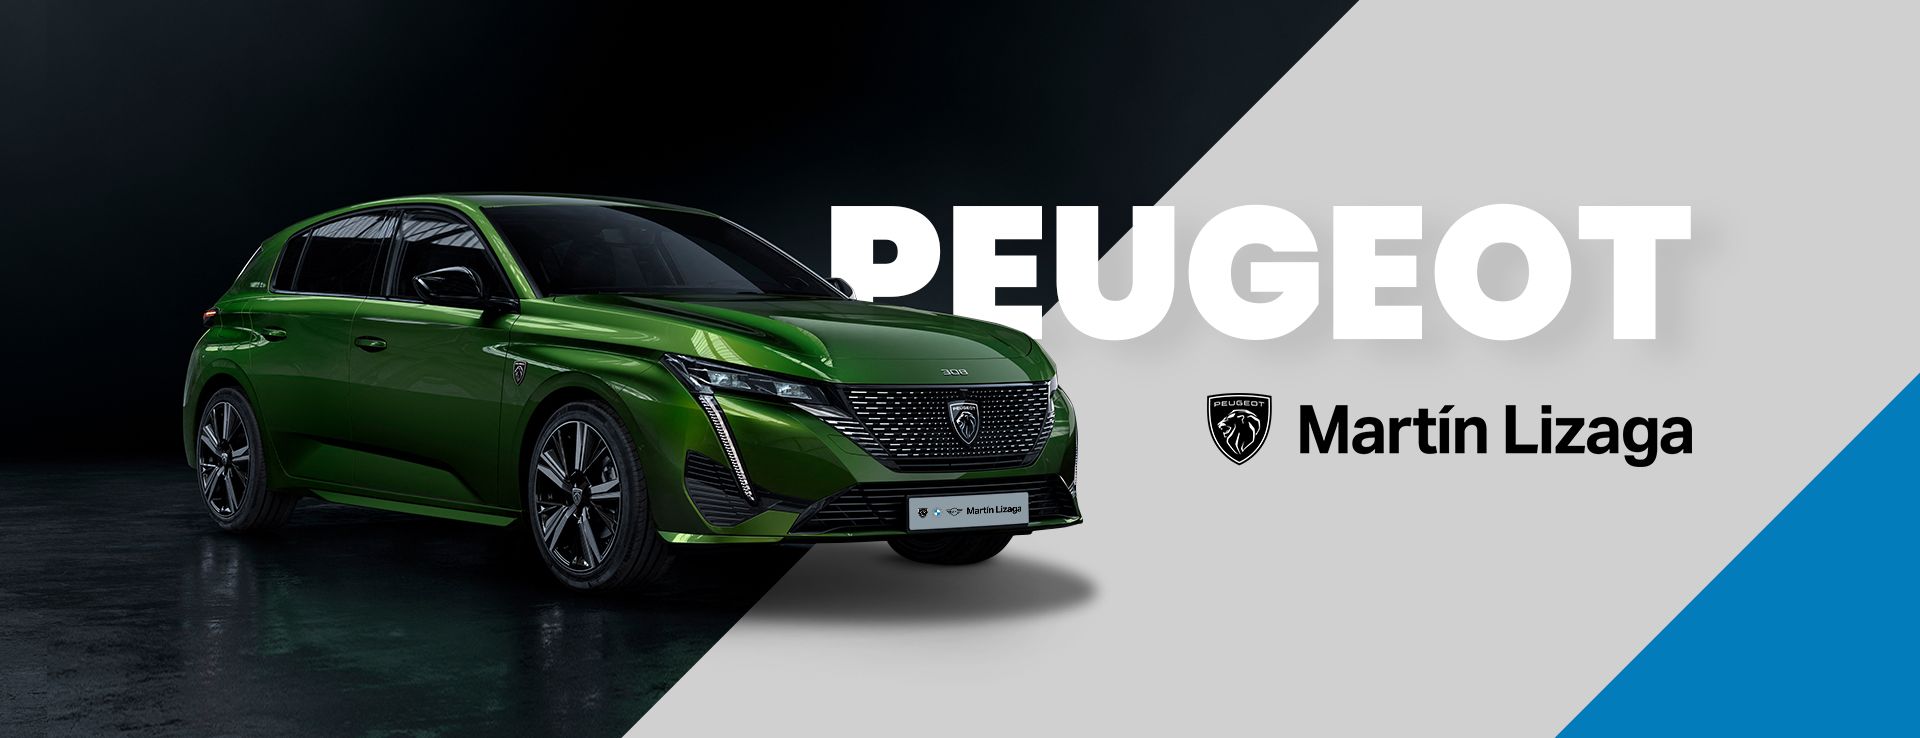 Martin Lizaga - Concesionario Peugeot Teruel